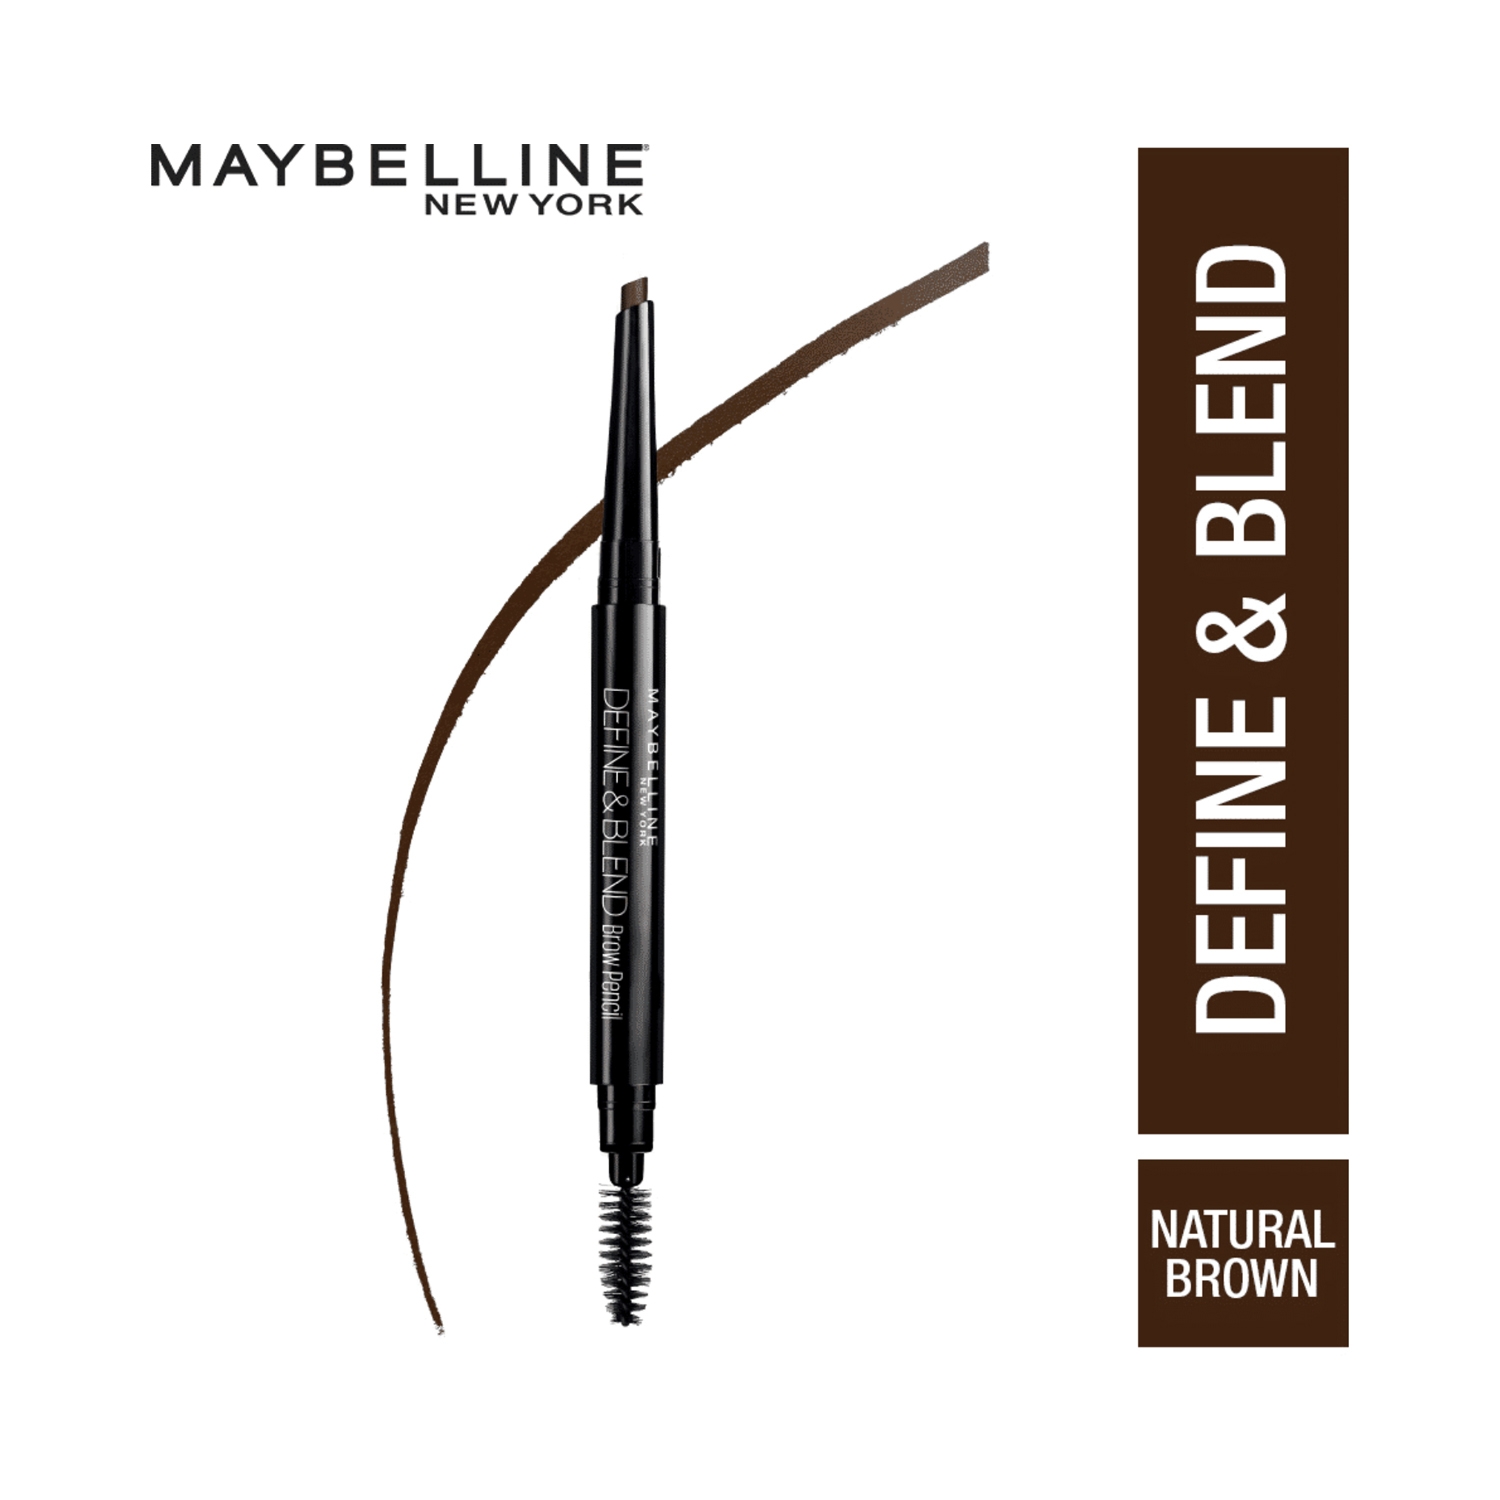 Maybelline New York | Maybelline New York Define & Blend Brow Pencil - Natural Brown (0.16g)